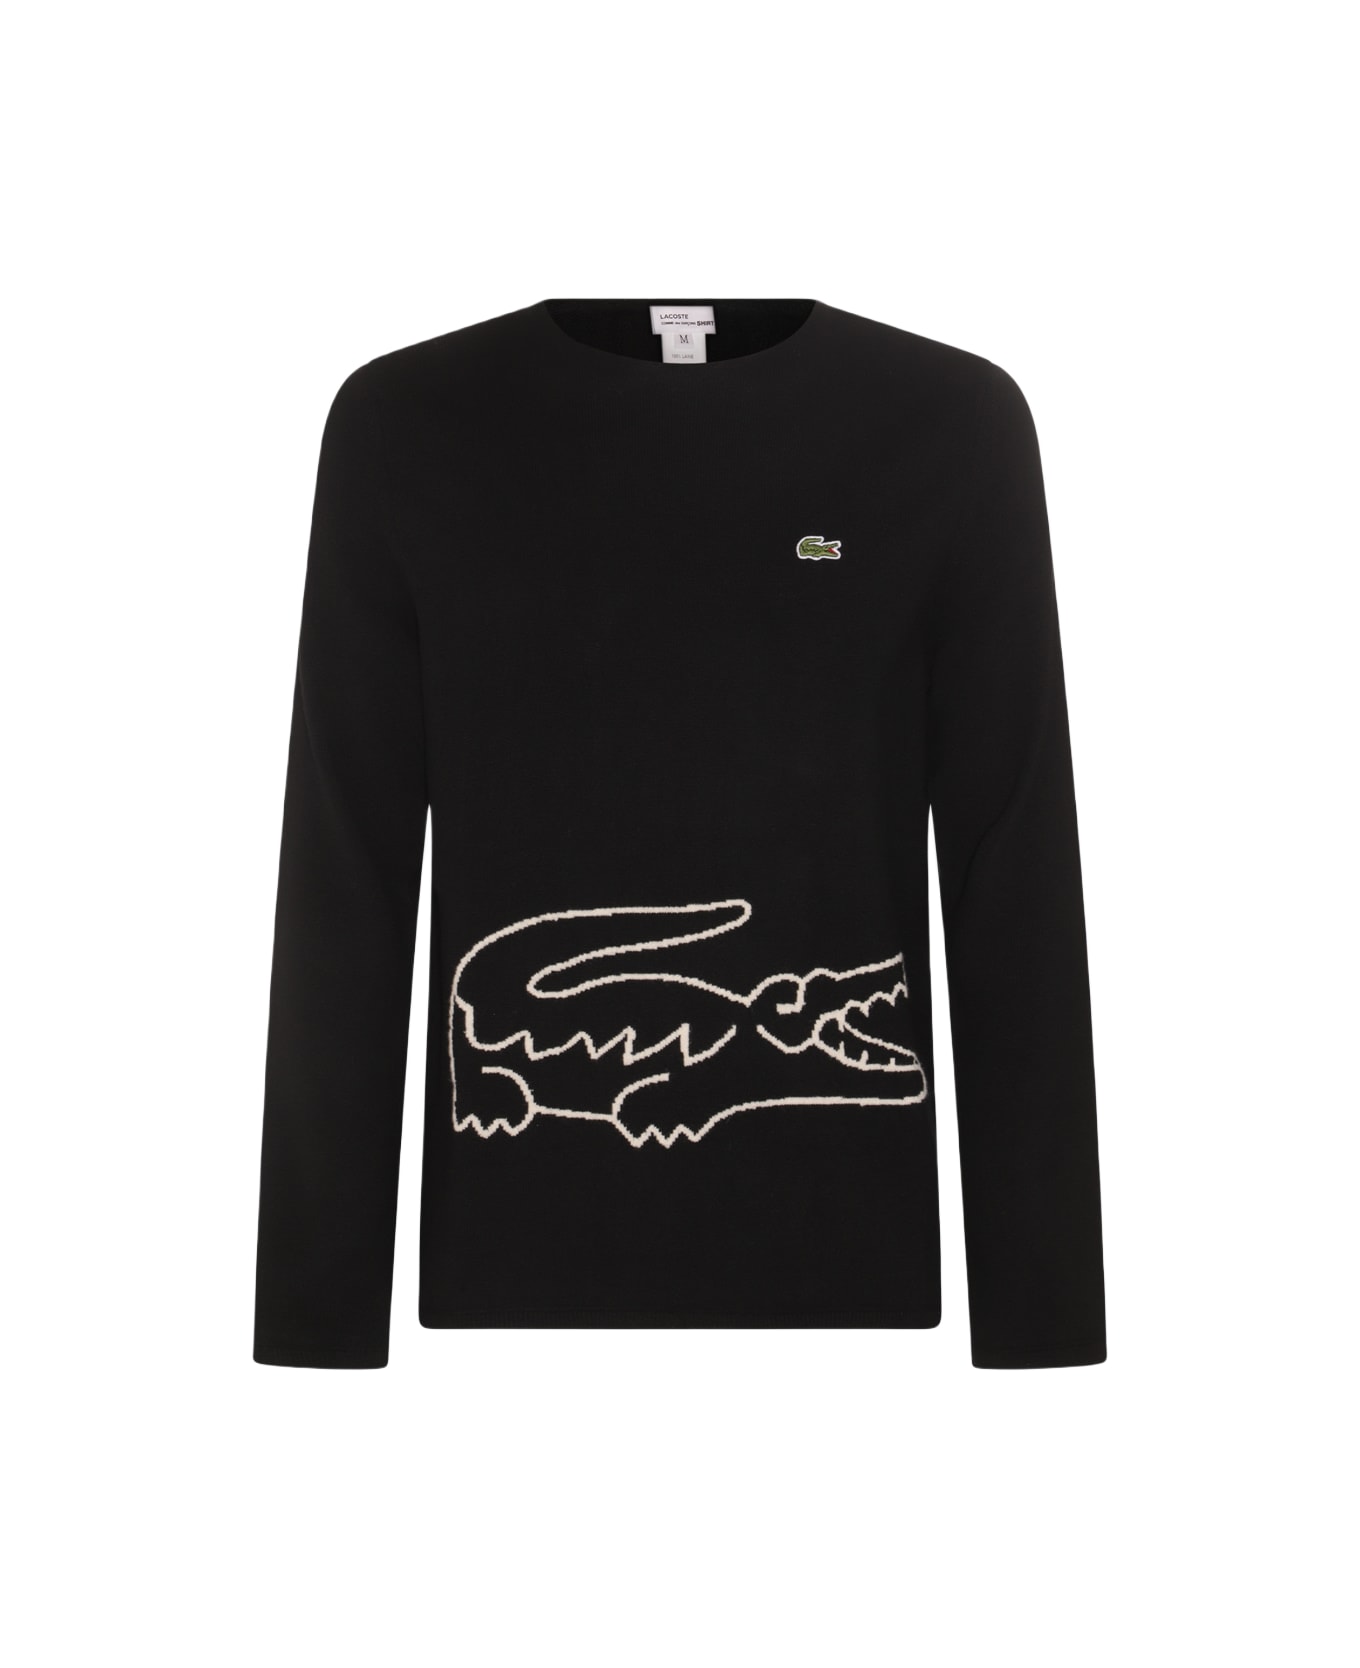 Comme des Garçons Black Wool Crocodile Sweater - Black